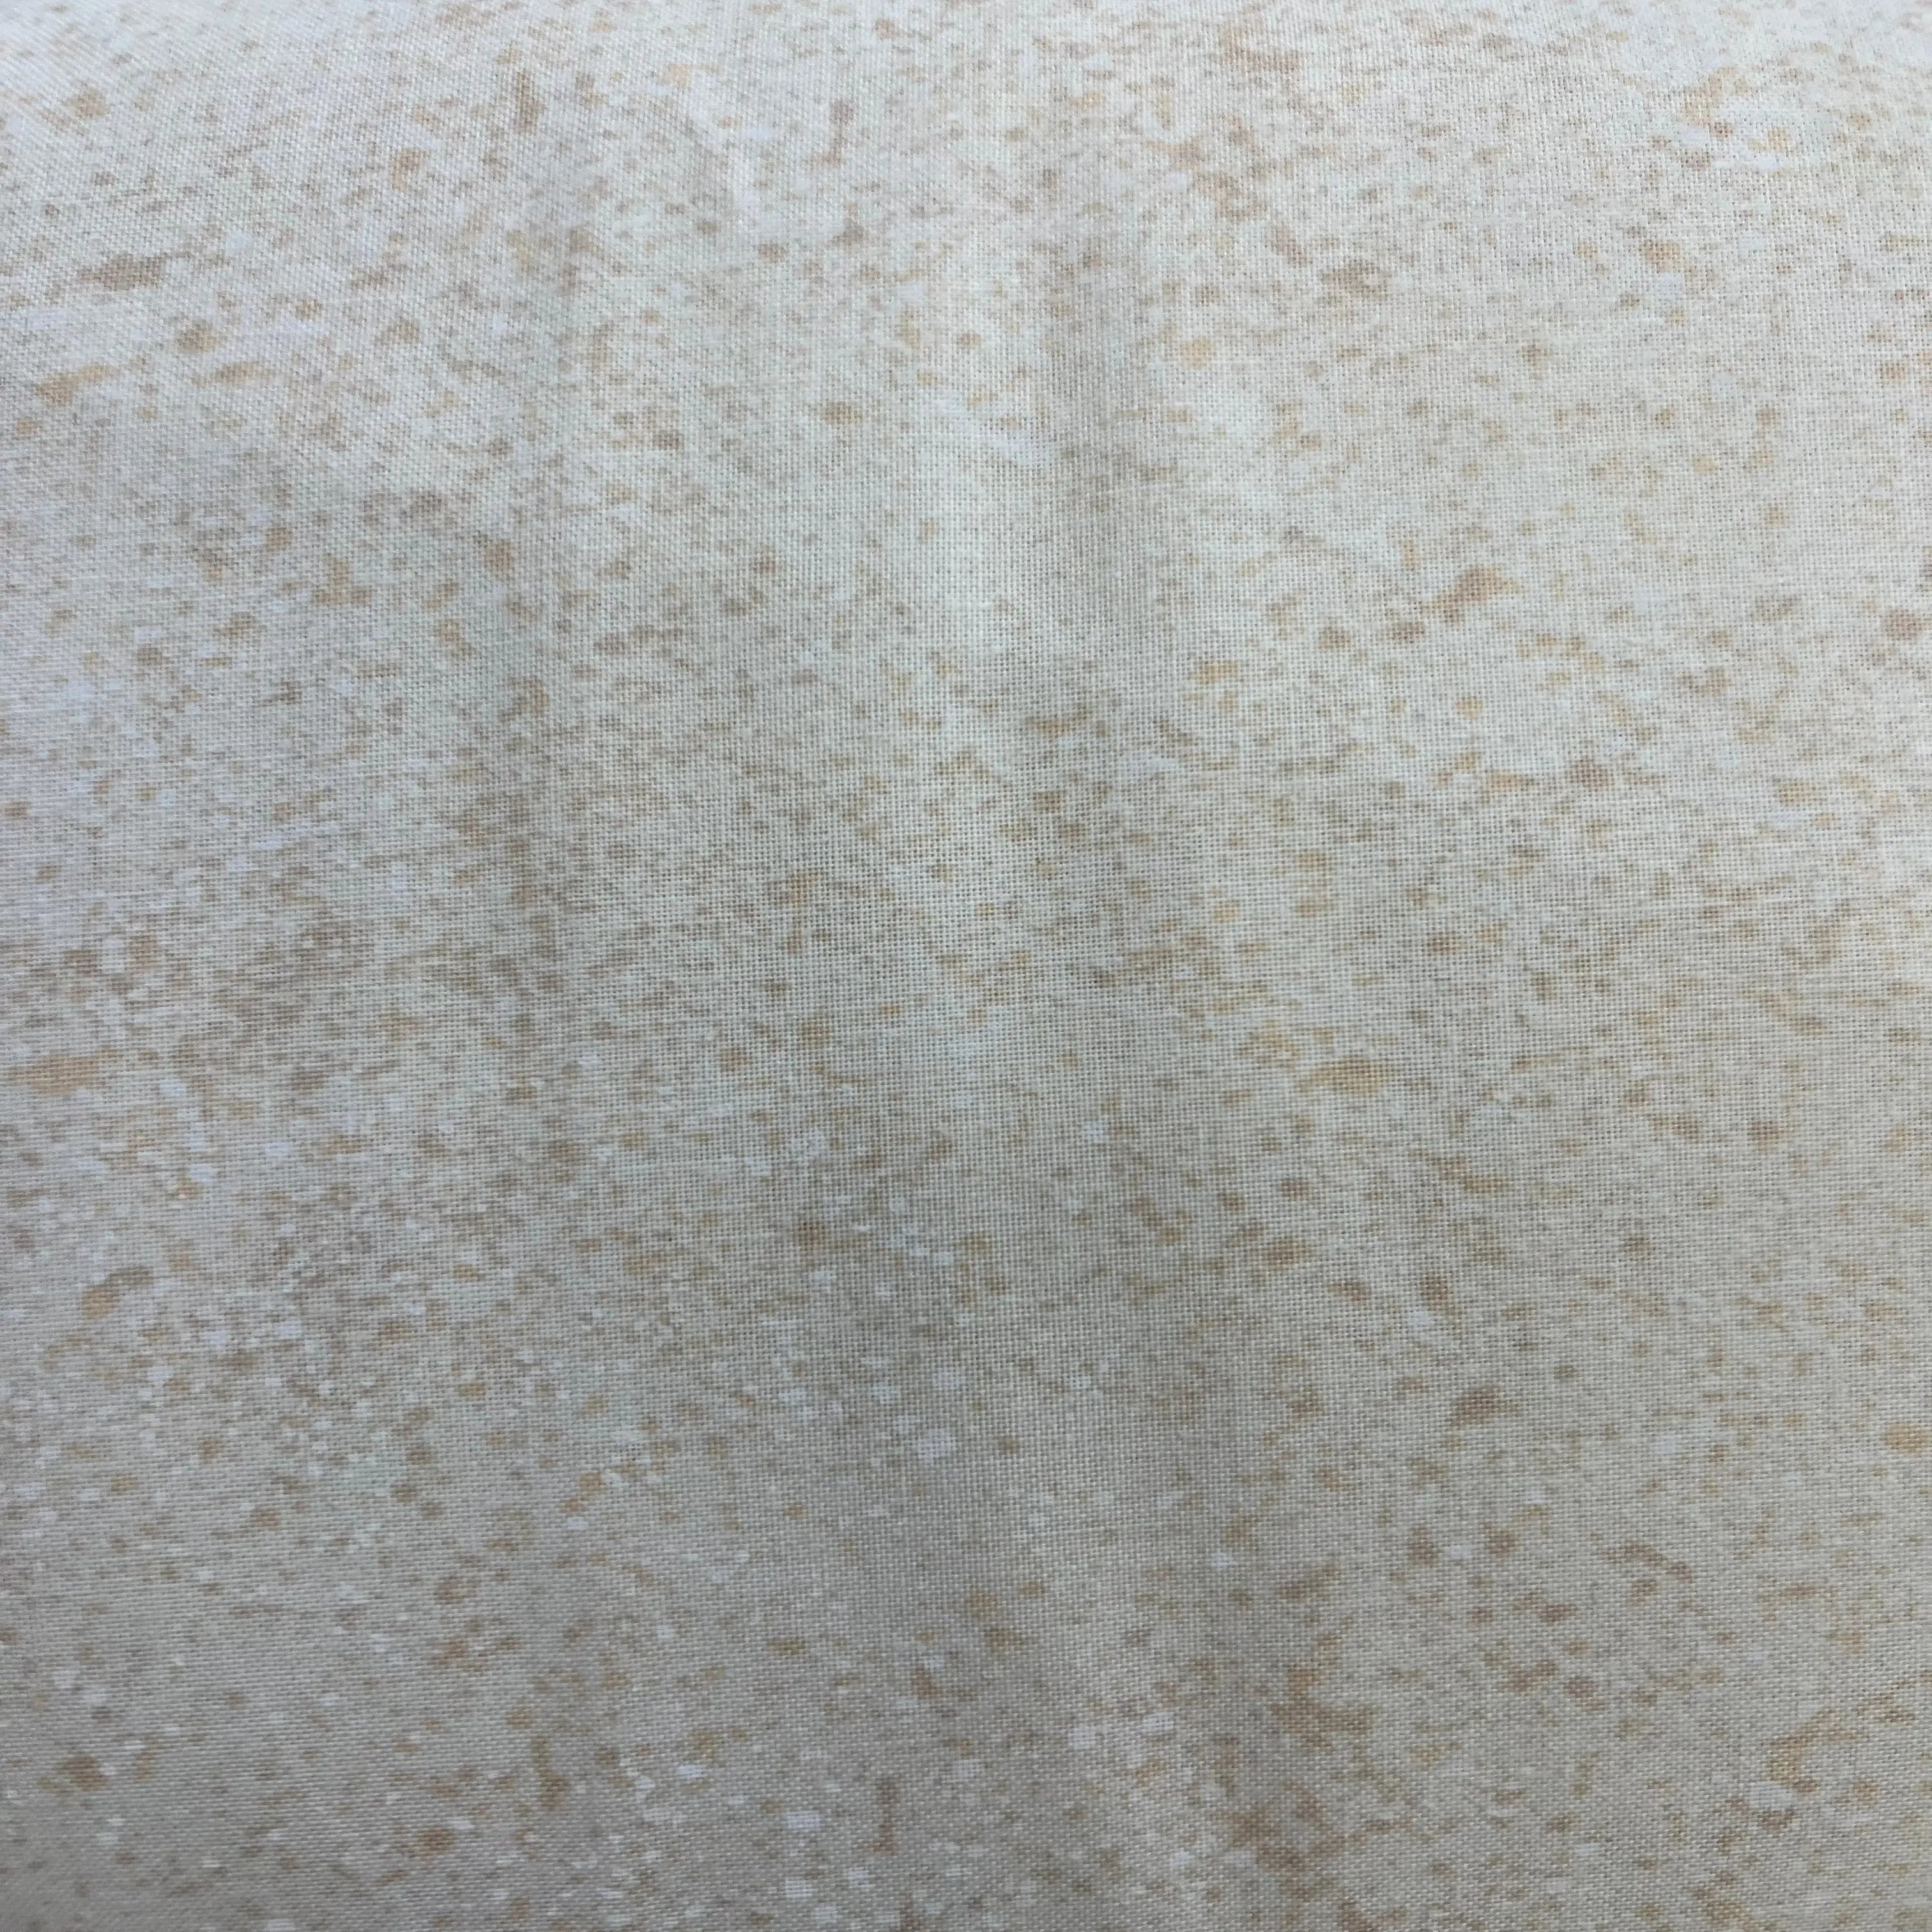 Natural Spatter Texture Cotton Wideback Fabric Per Yard